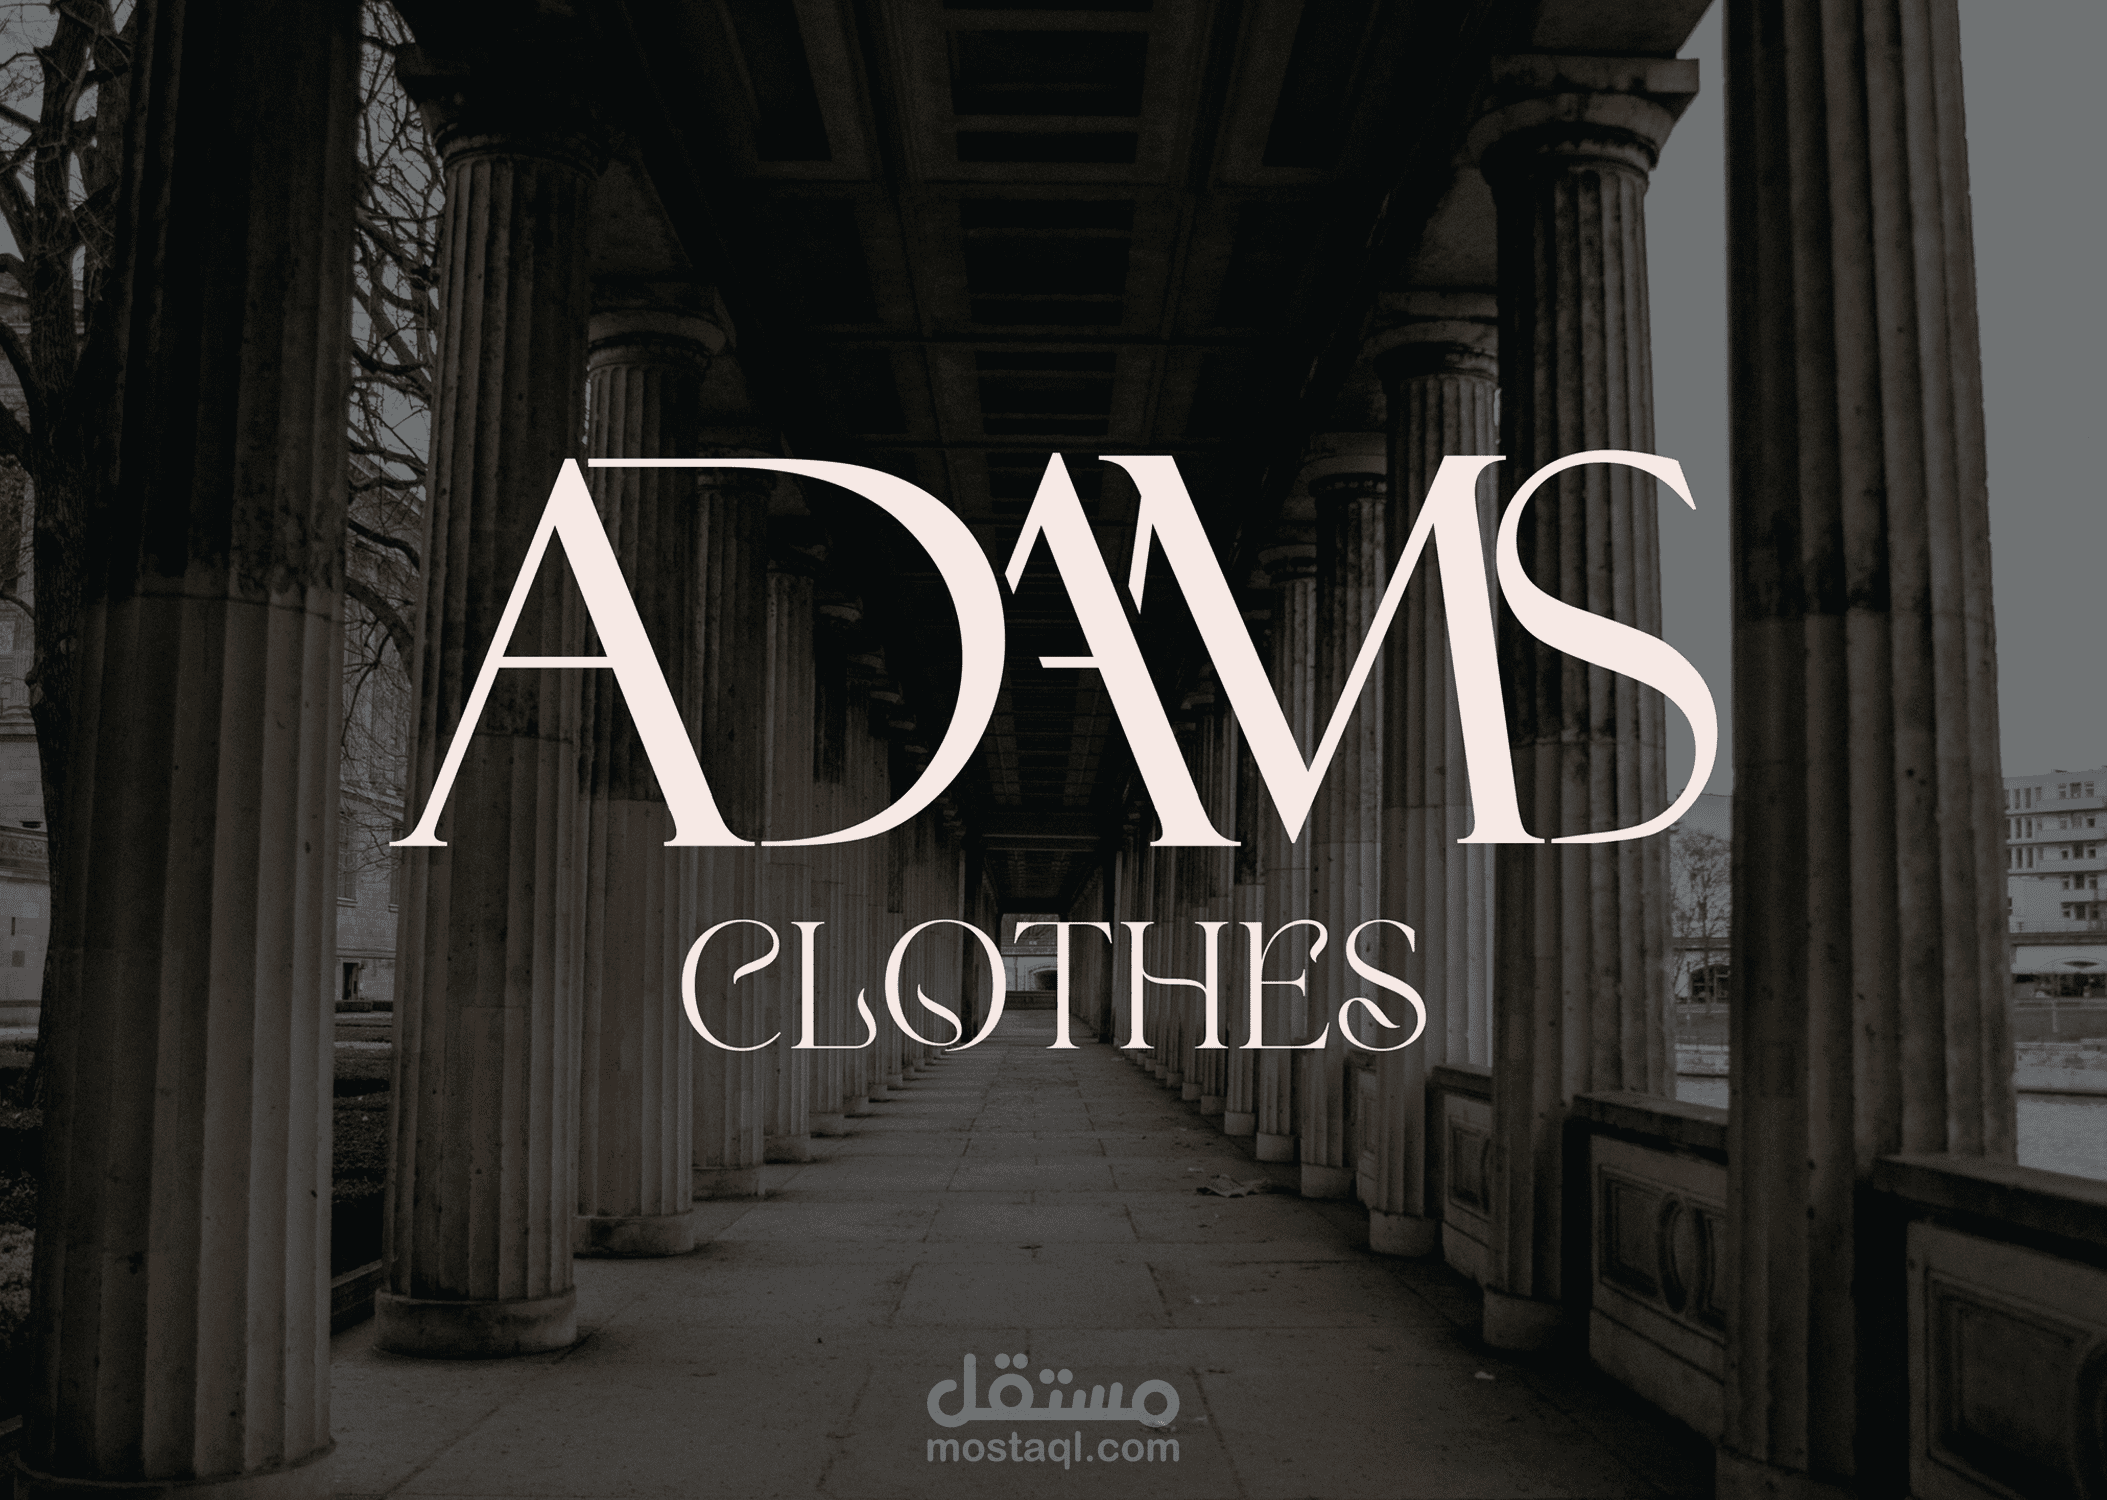 ADAMS clothing brand logo | مستقل